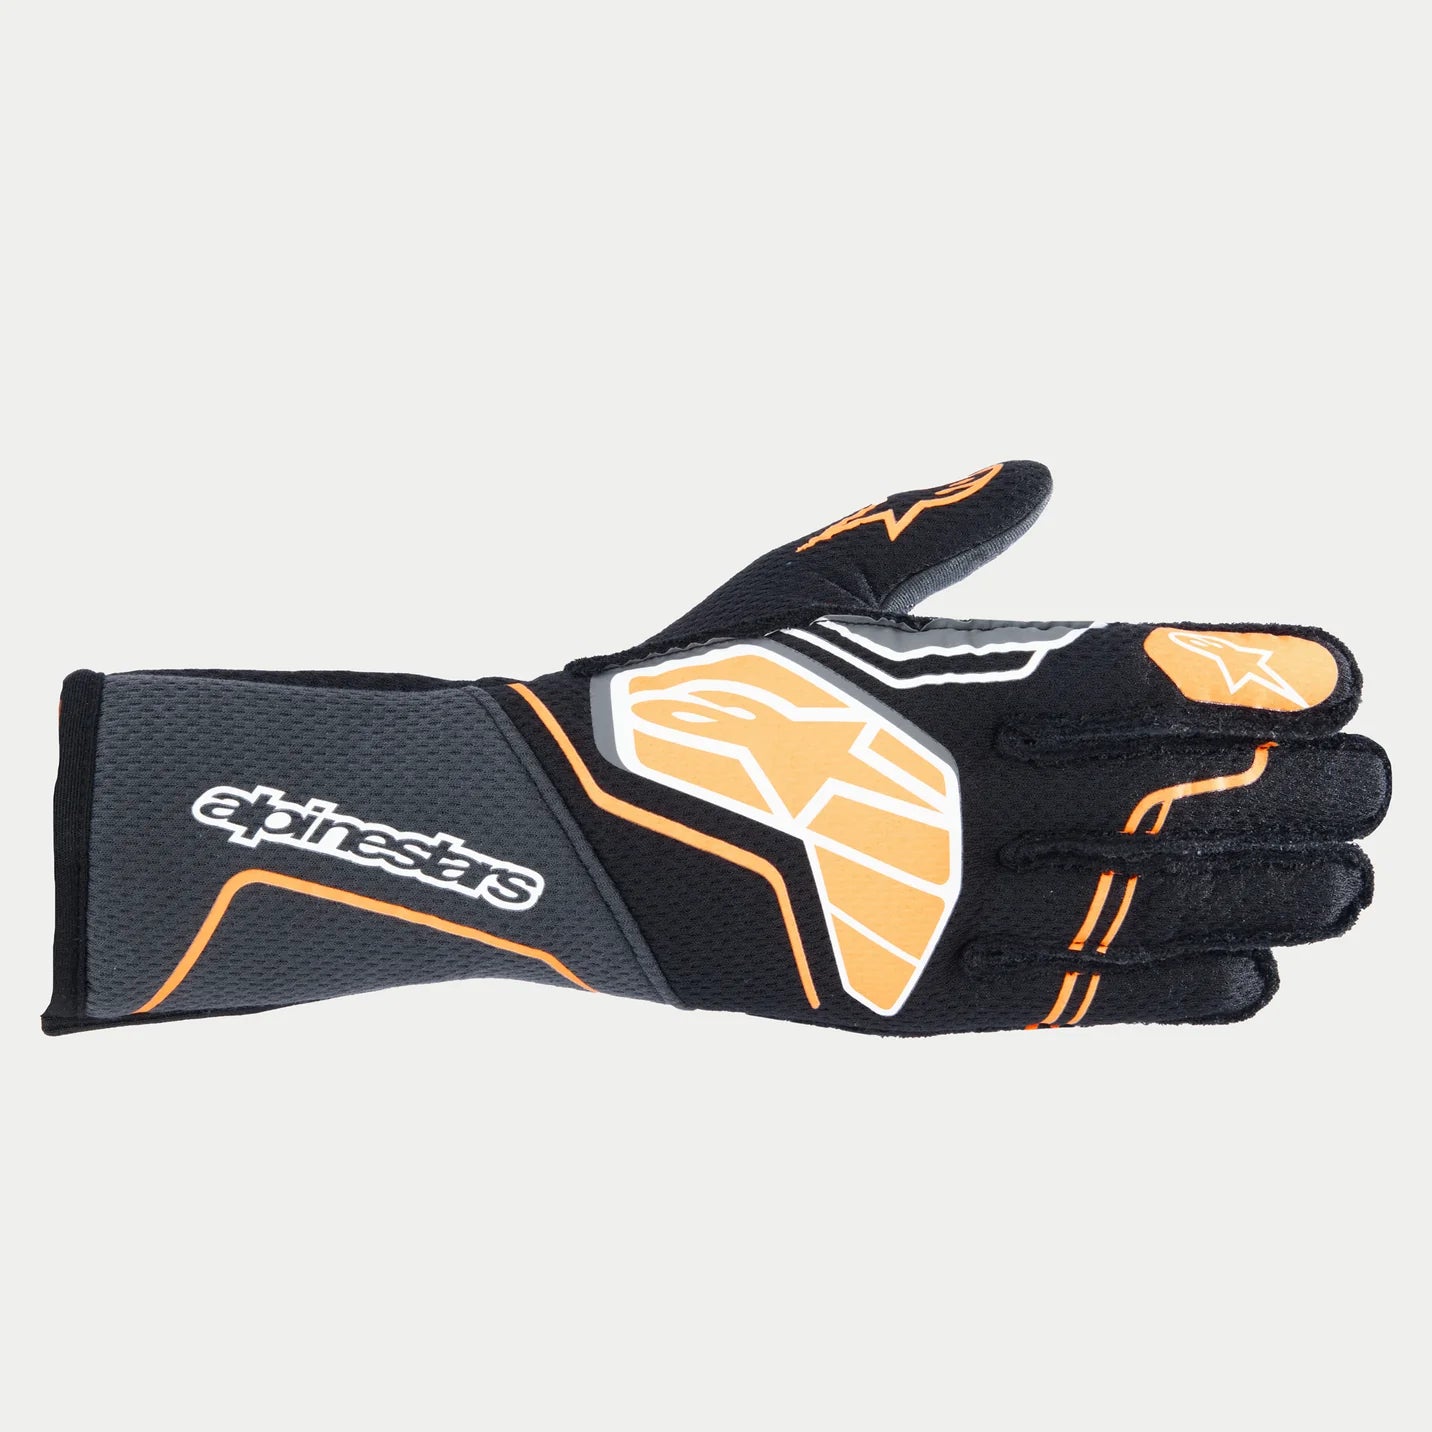 Alpinestars Tech 1-ZX V4 Glove